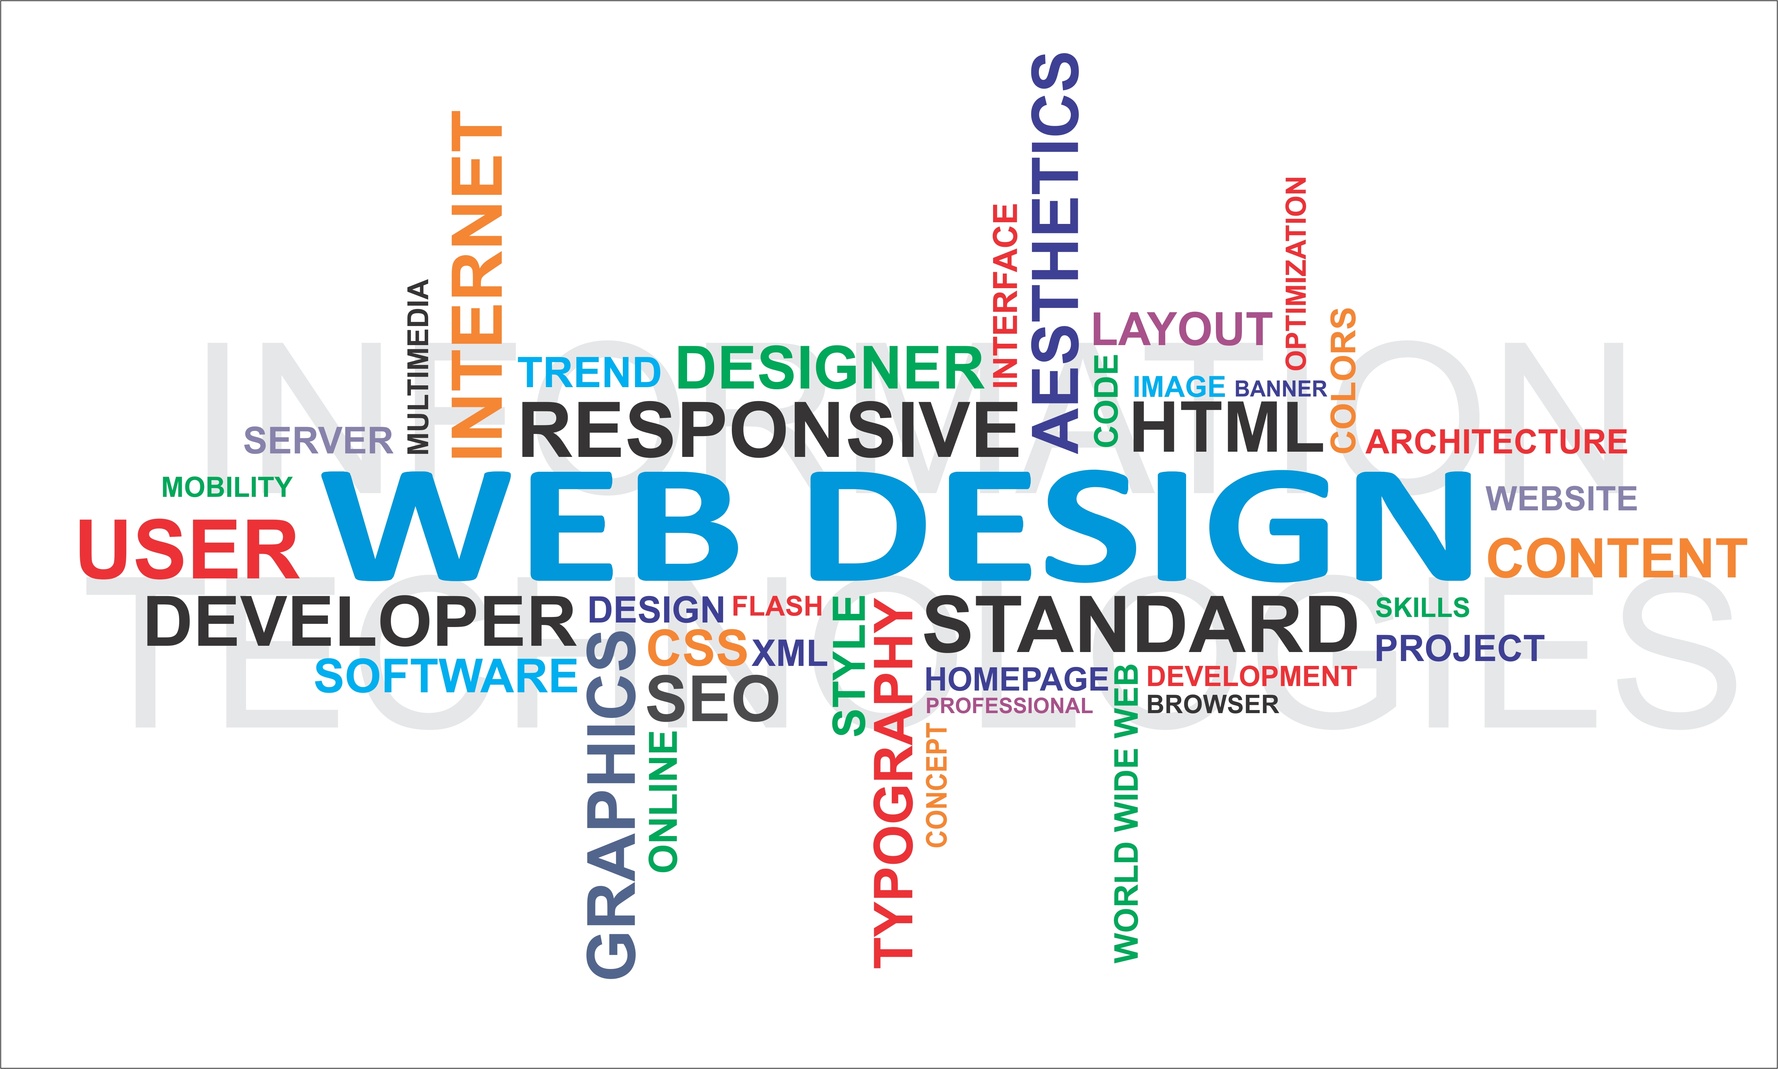 Web Design Images